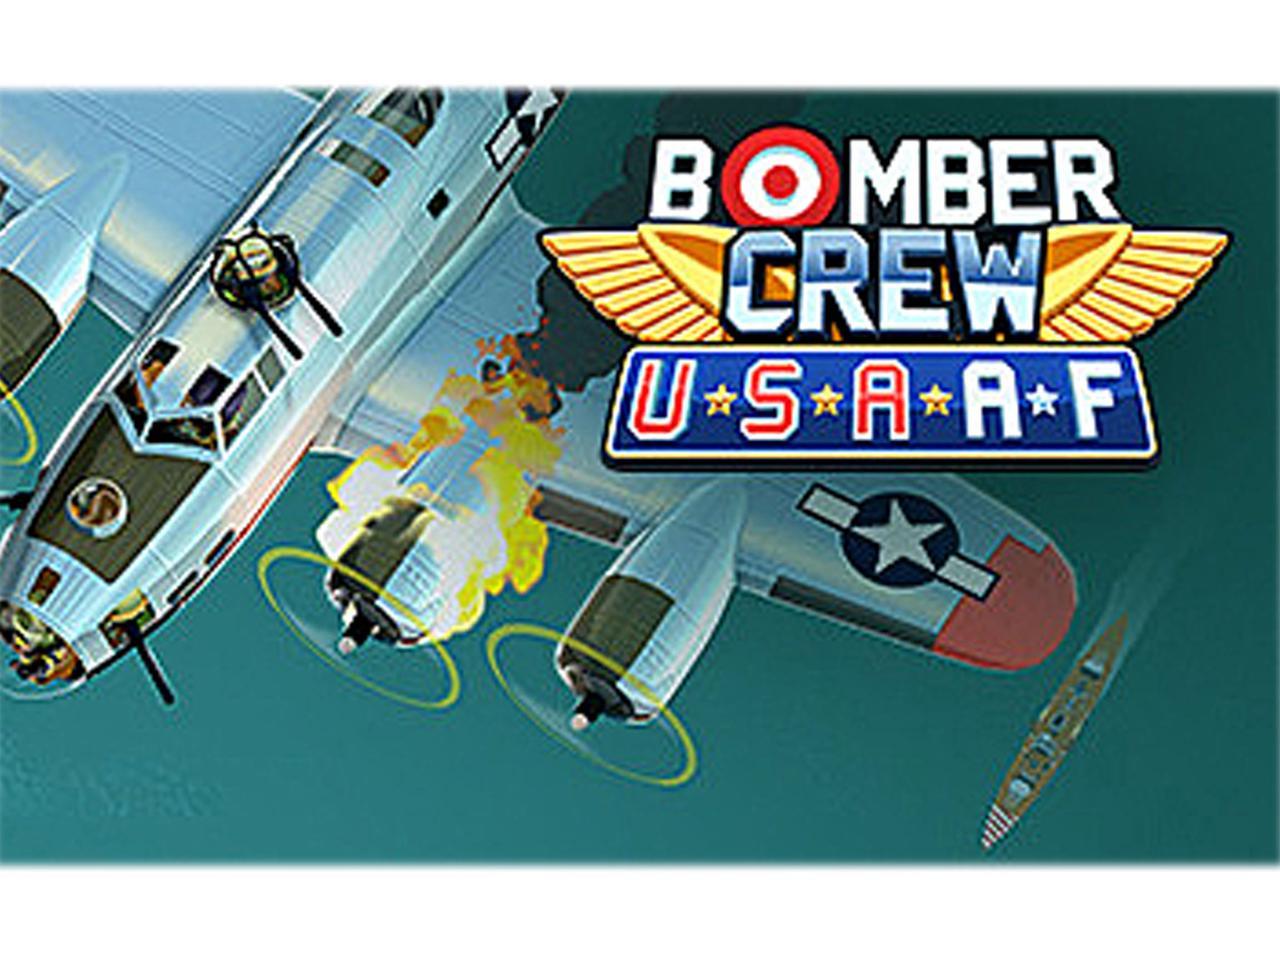 bomber crew steam